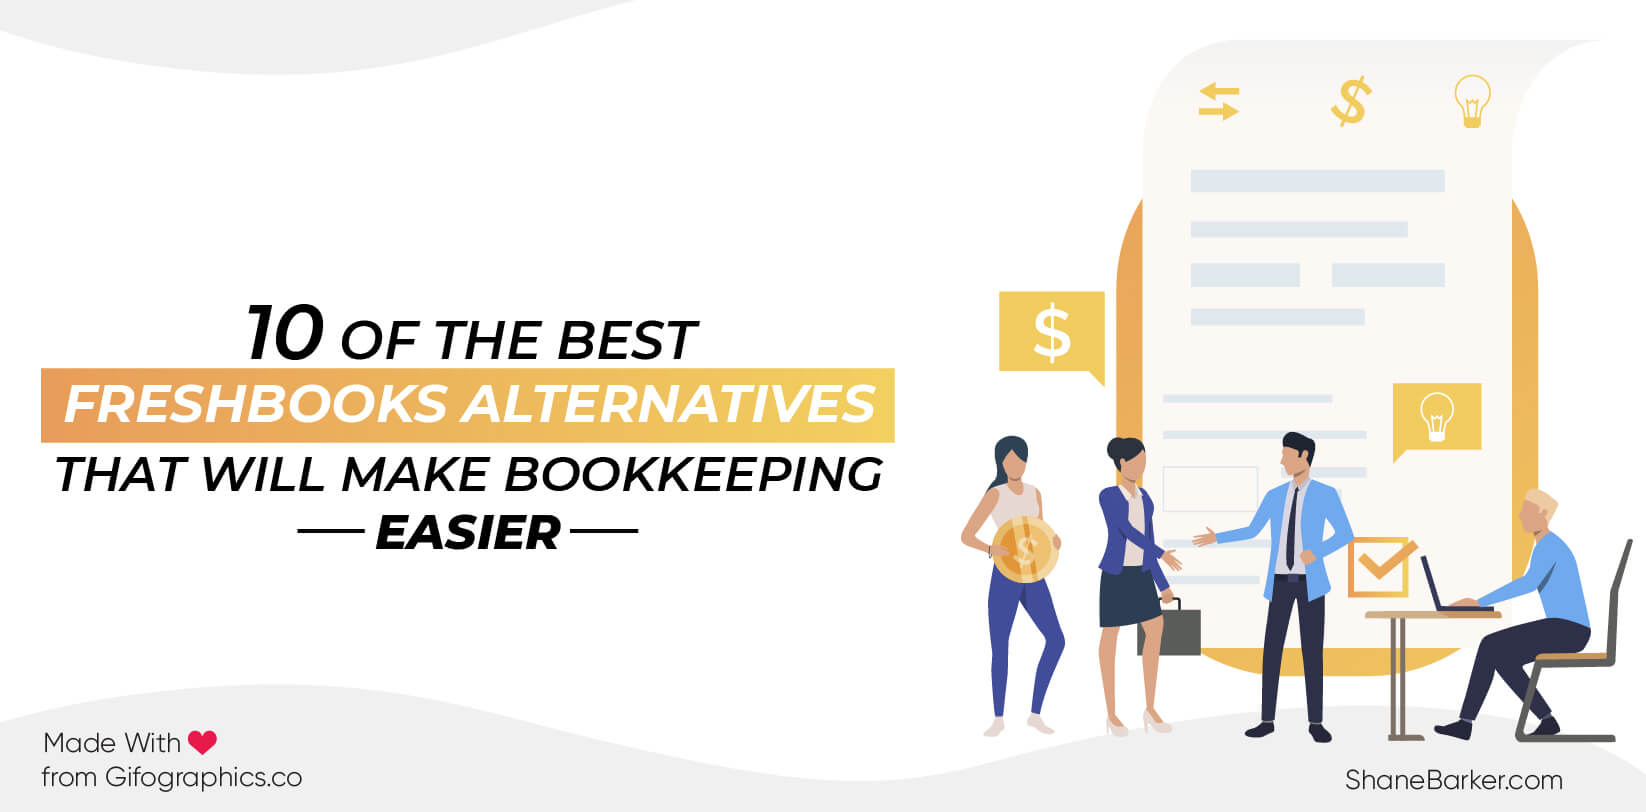 10 of the best freshbooks alternatives that will make bookkeeping easier